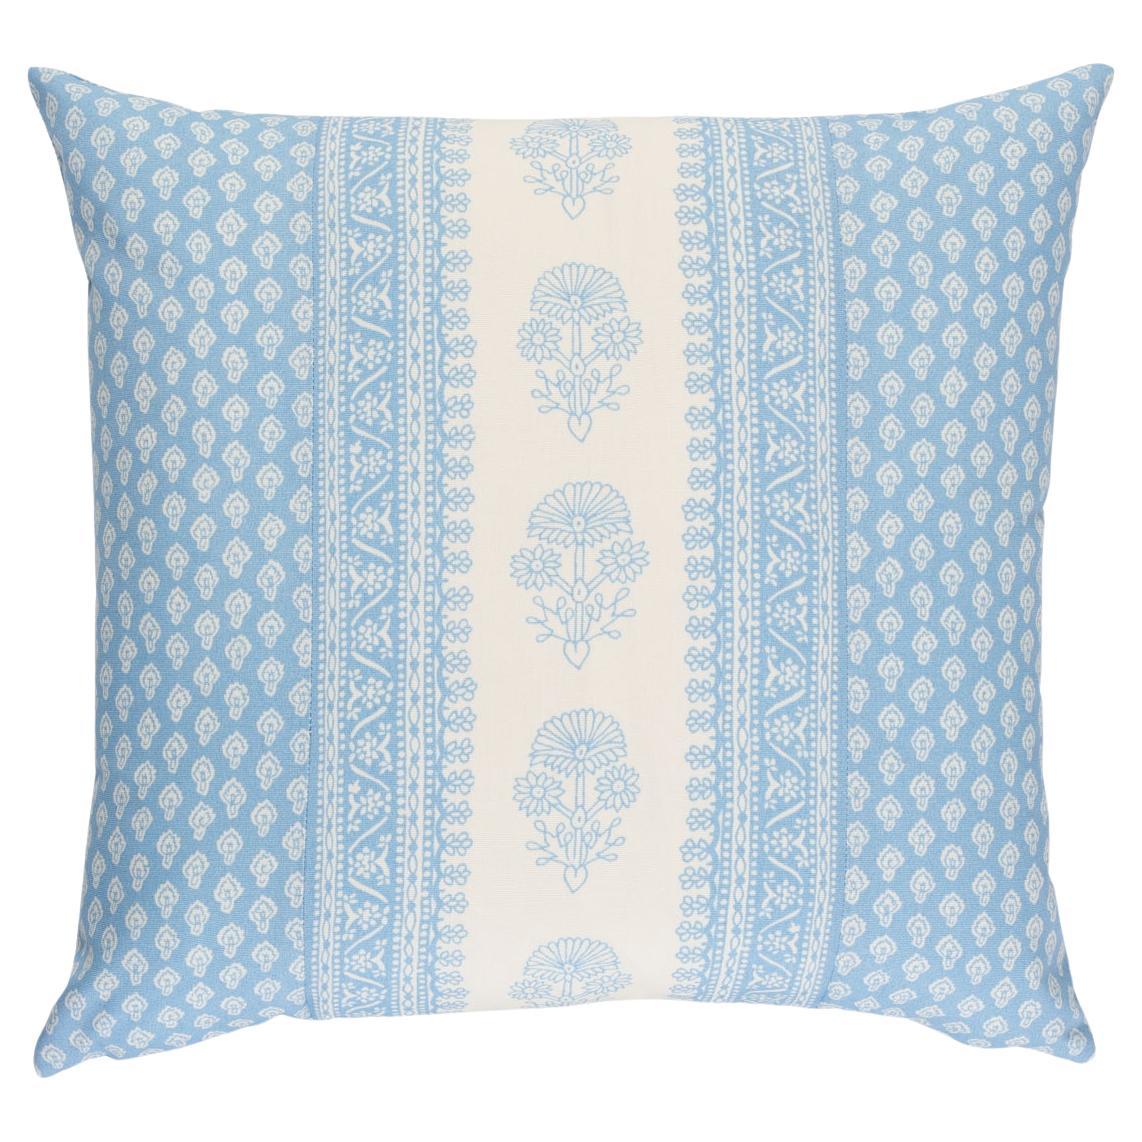 Hyacinth I/O Pillow 20 "